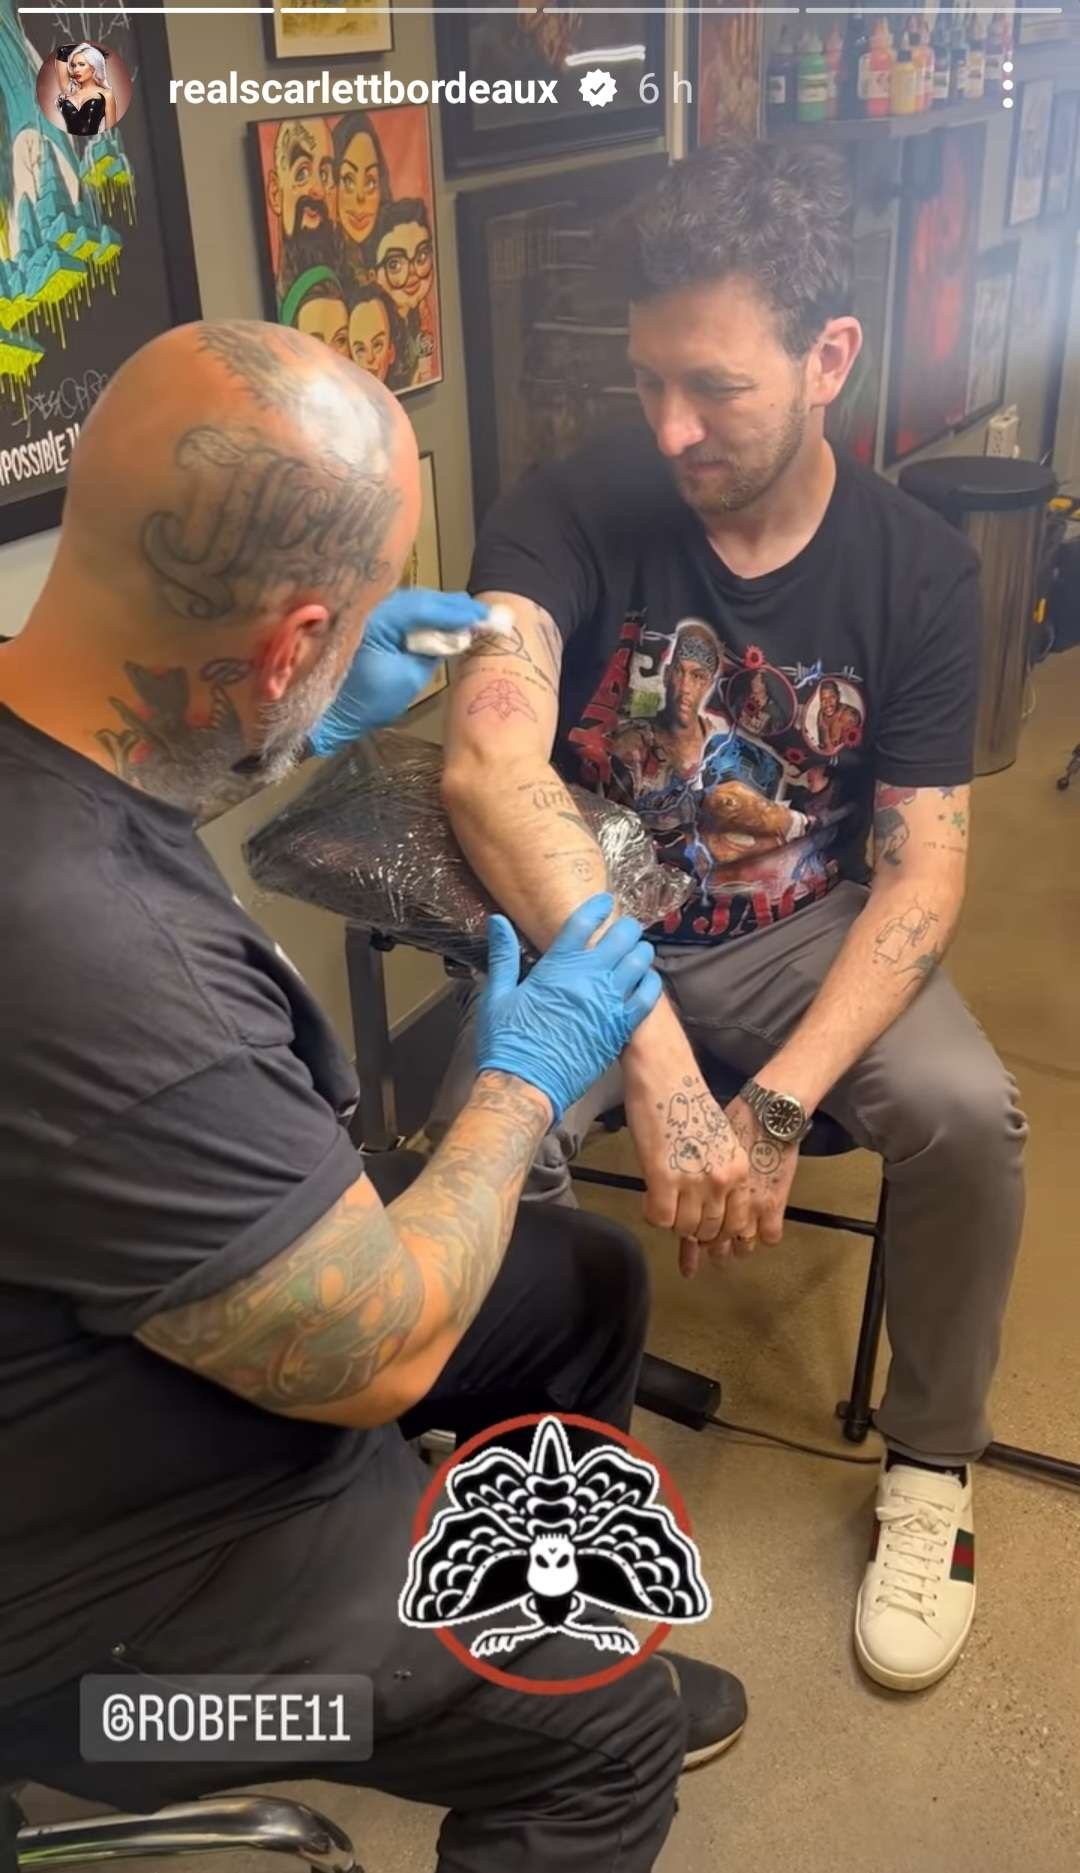 WWE stars pay tribute to Bray Wyatt with matching tattoos